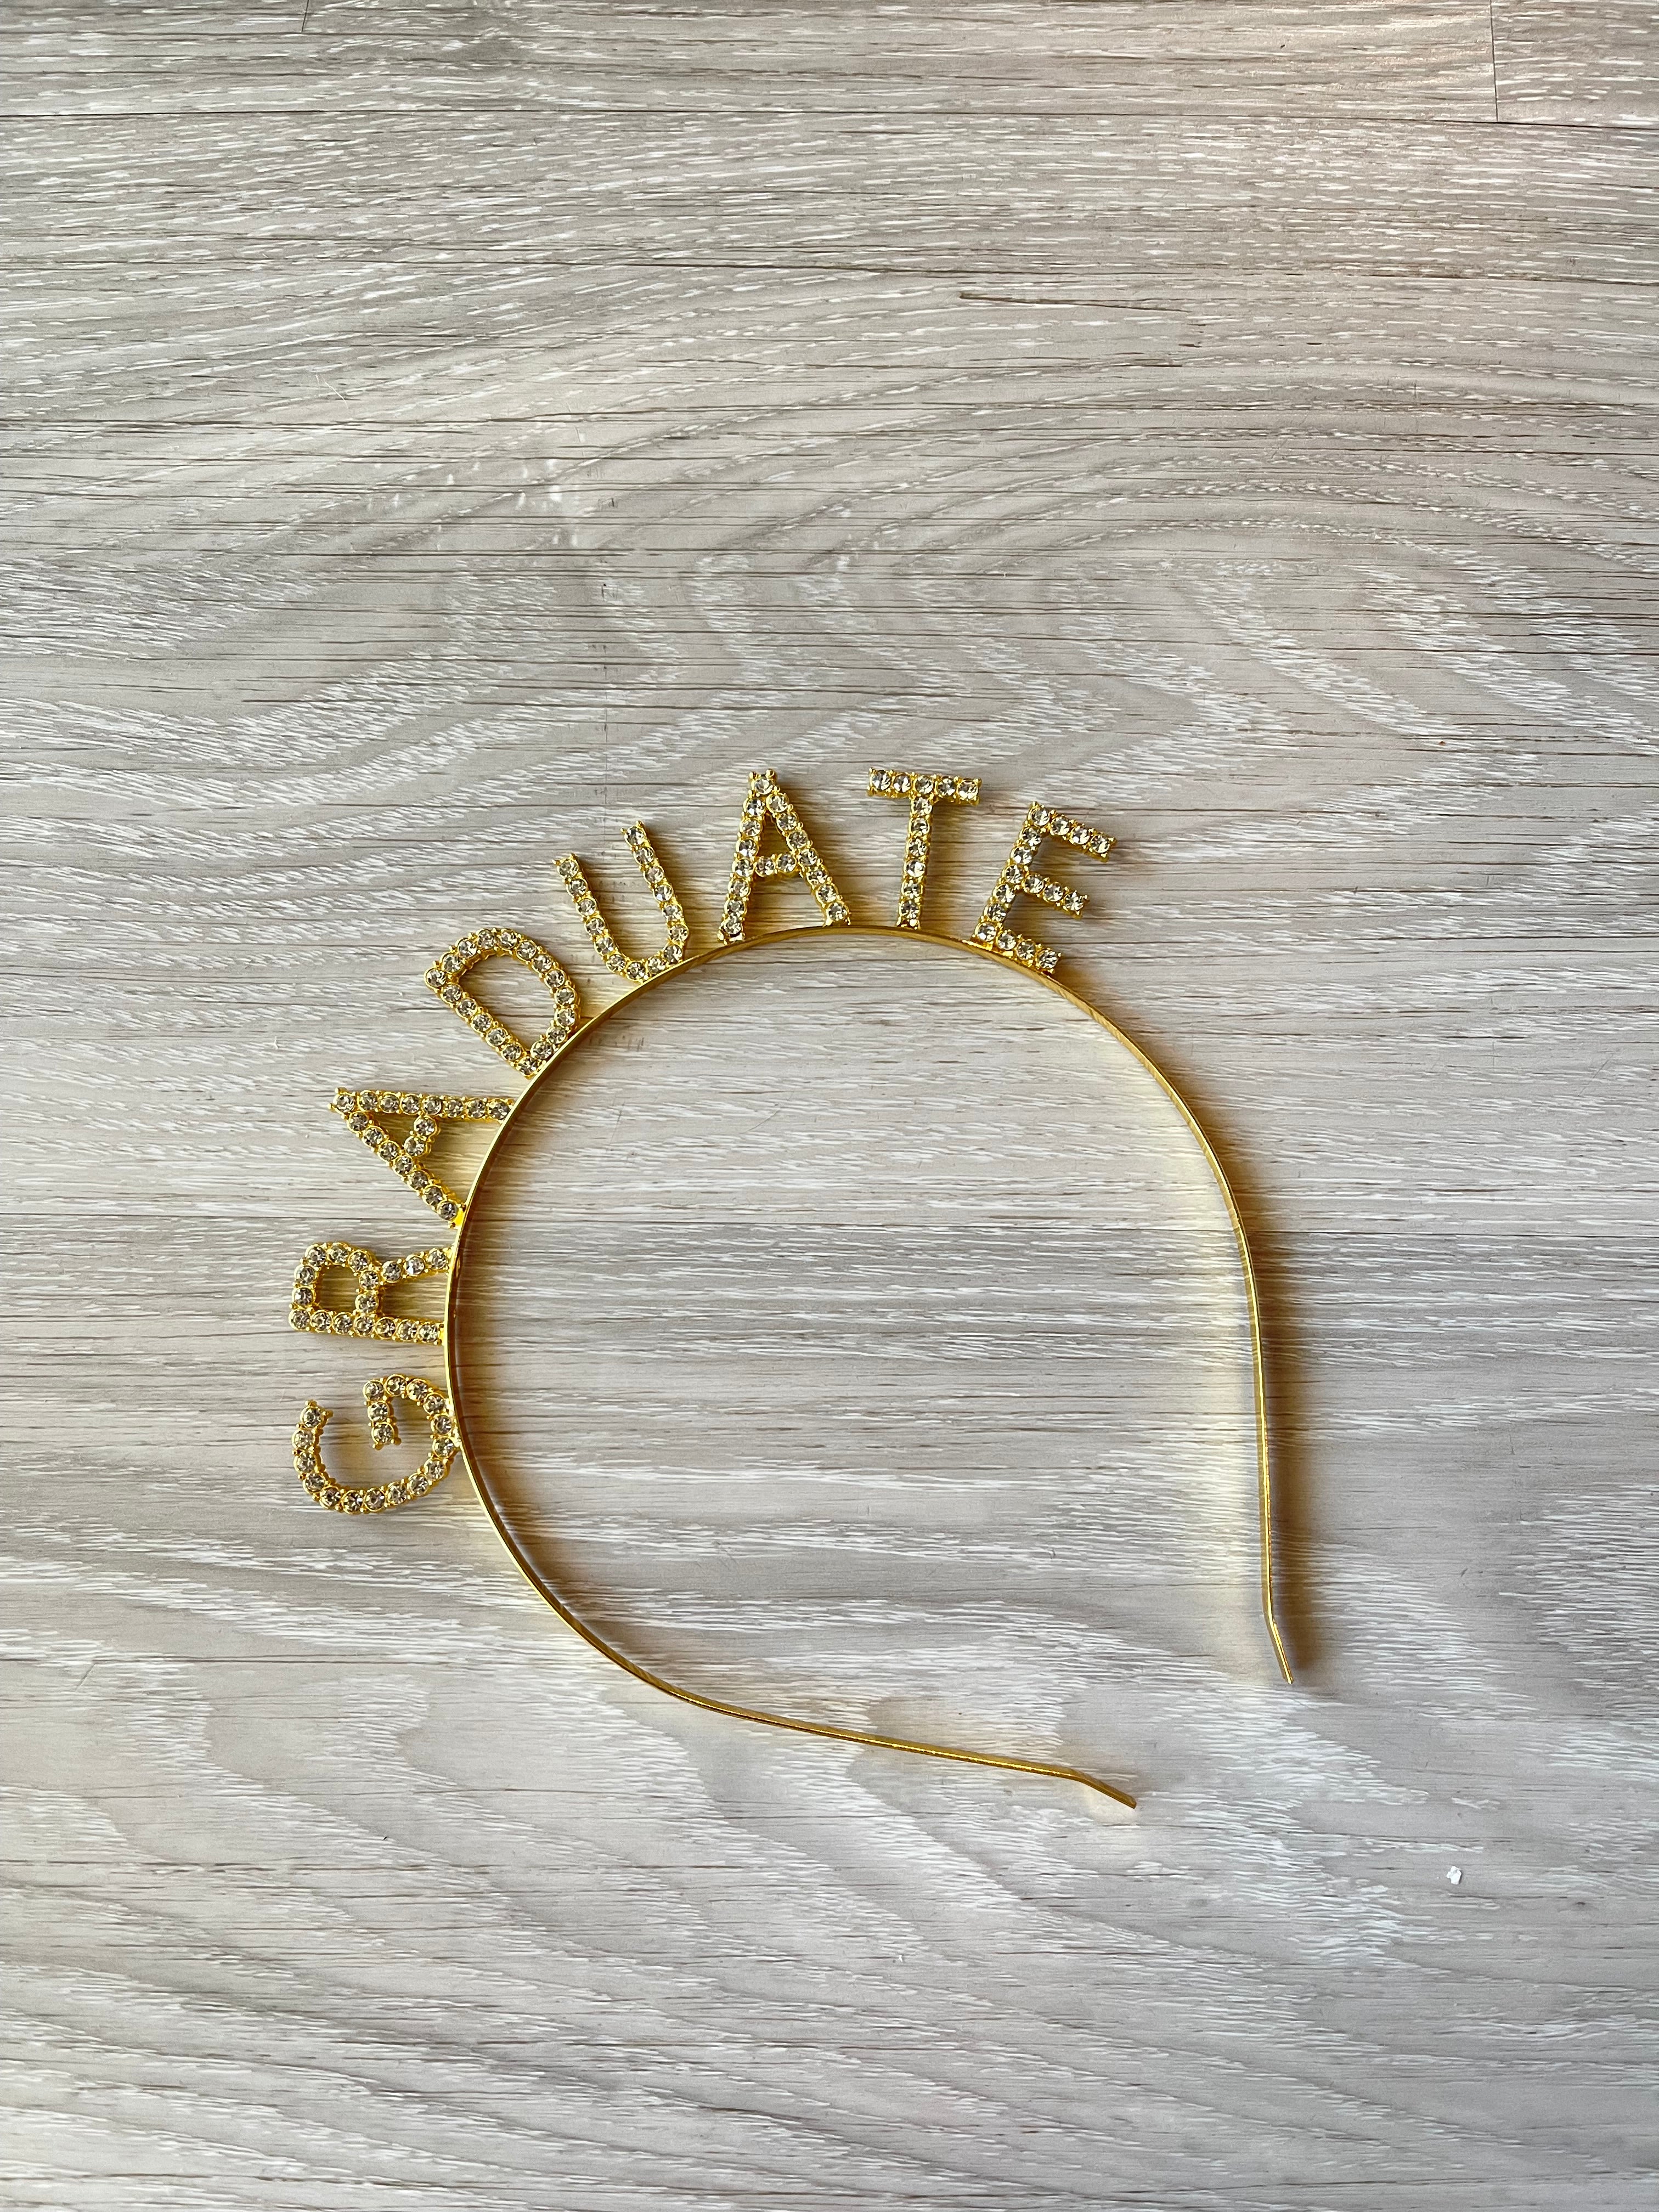 Graduation head band🎓